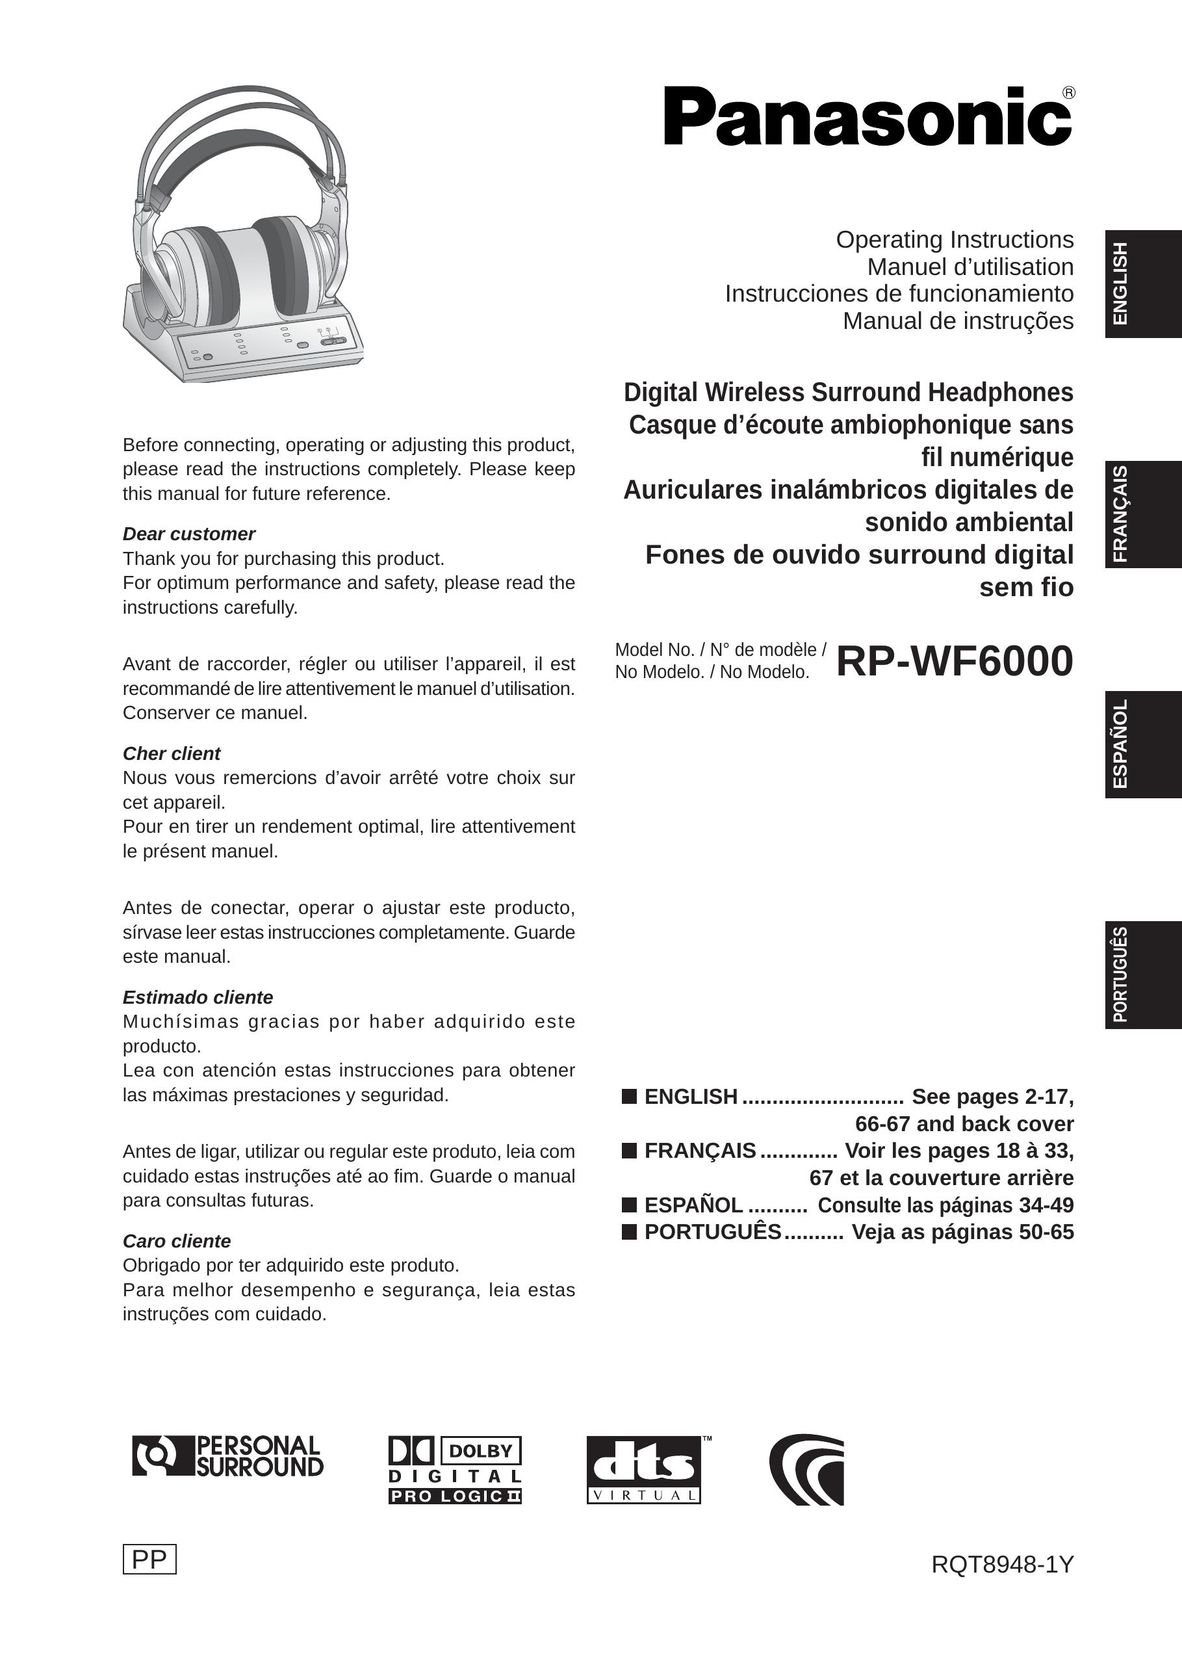 Panasonic RPWF6000 Headphones User Manual